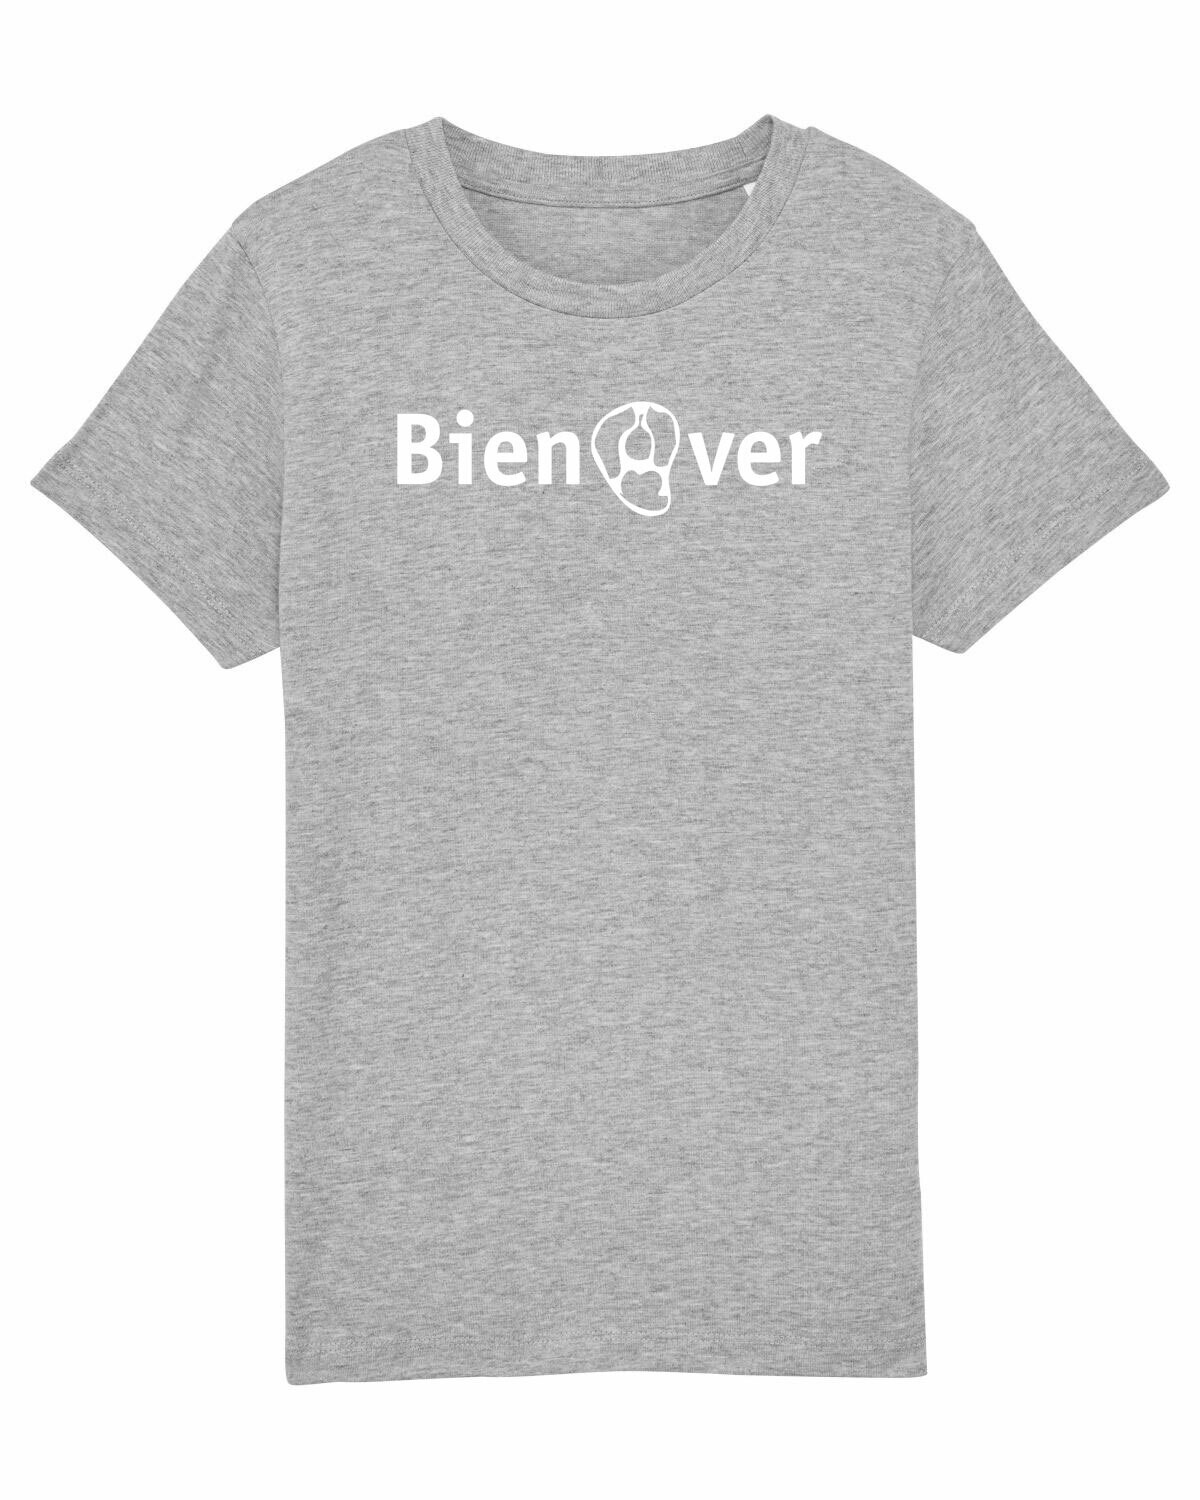 Kids T-shirt Bienover